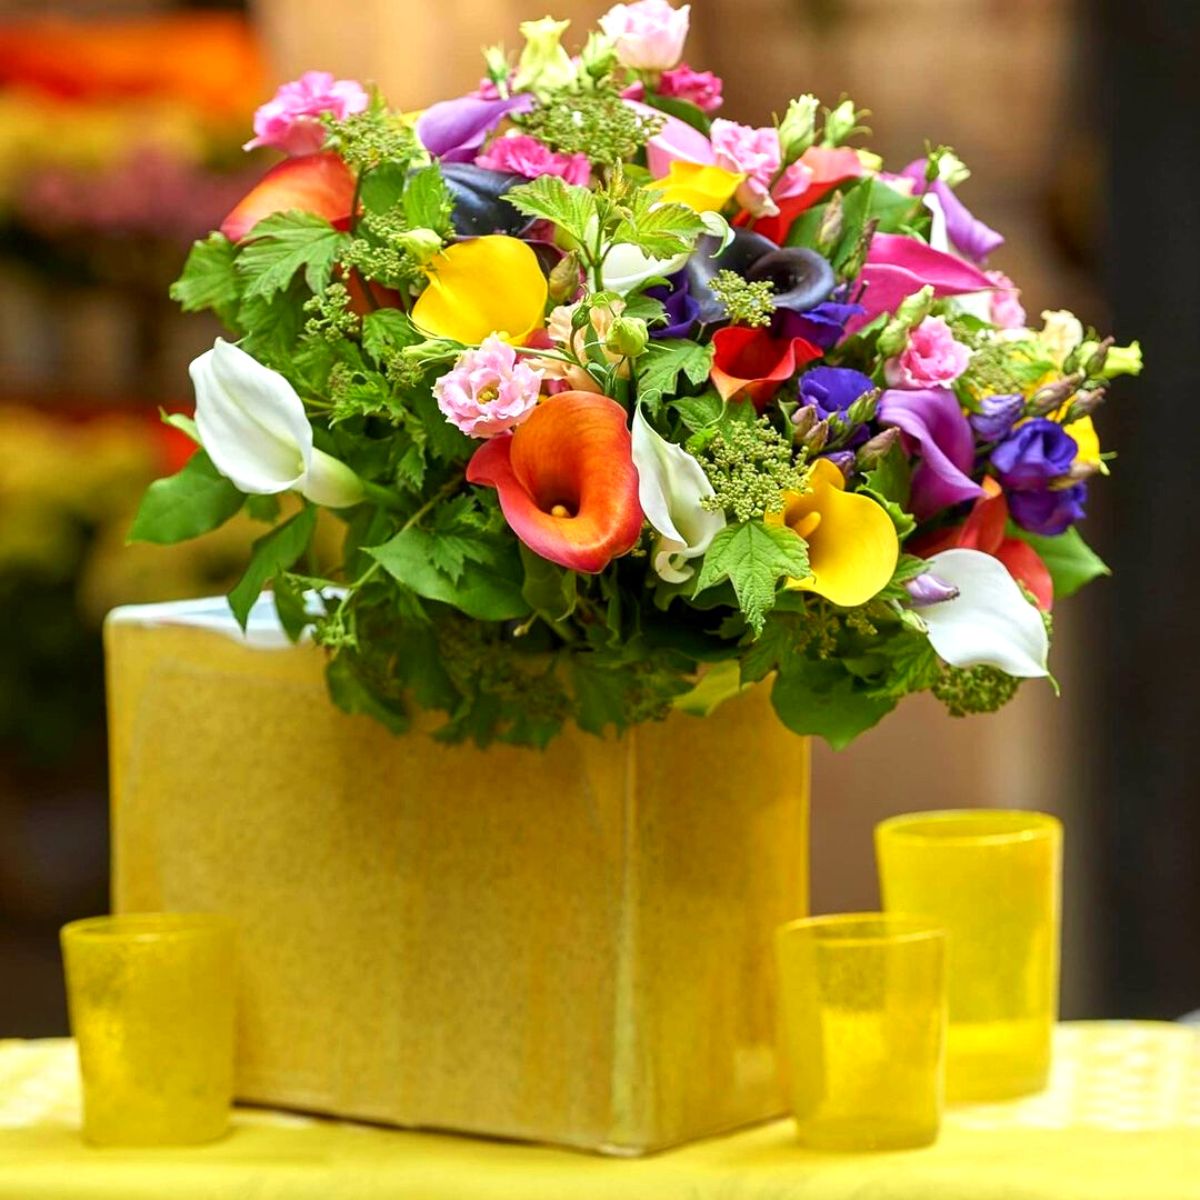 Summer arrangement including calla flowers